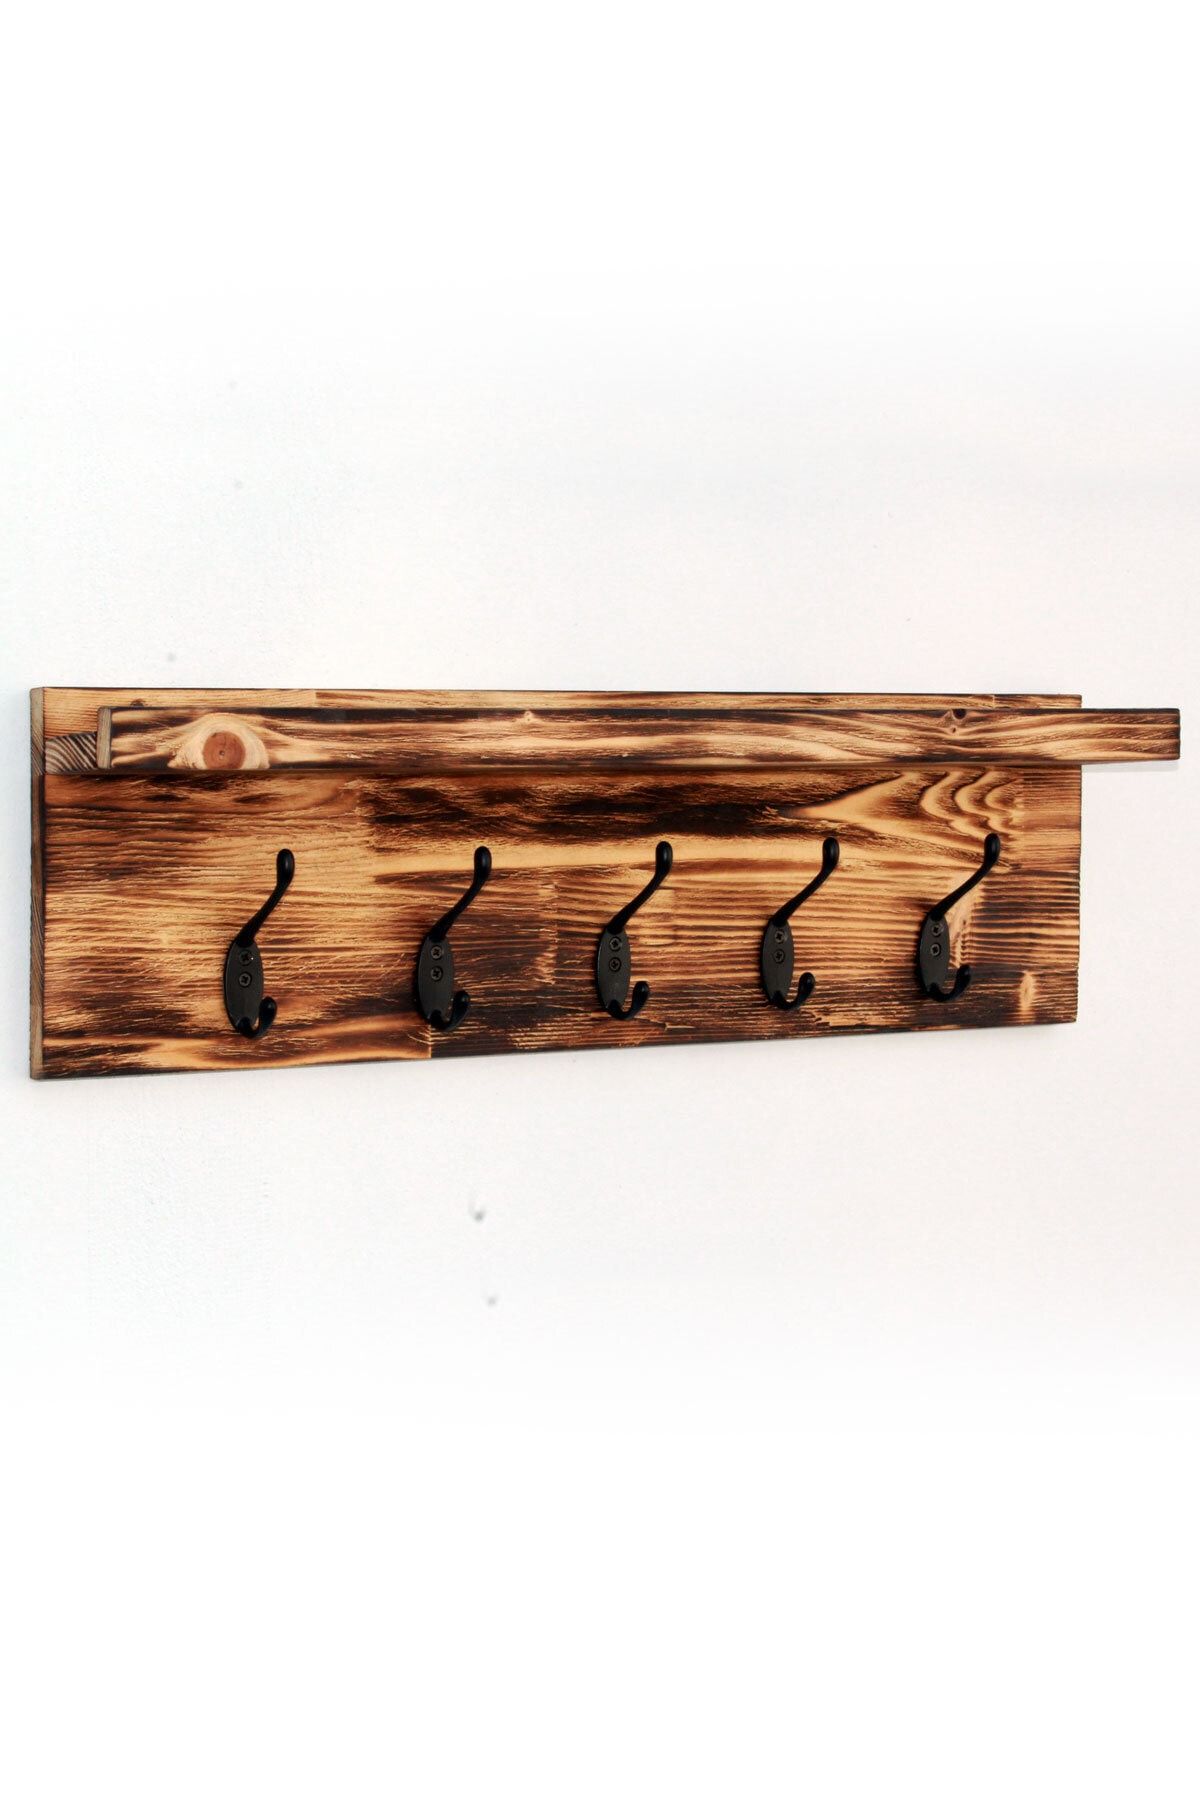 atomic Overlap Notorious Cuier din lemn cu 5 agatatori Eli Homs, 65 x 20 cm, maro rustic